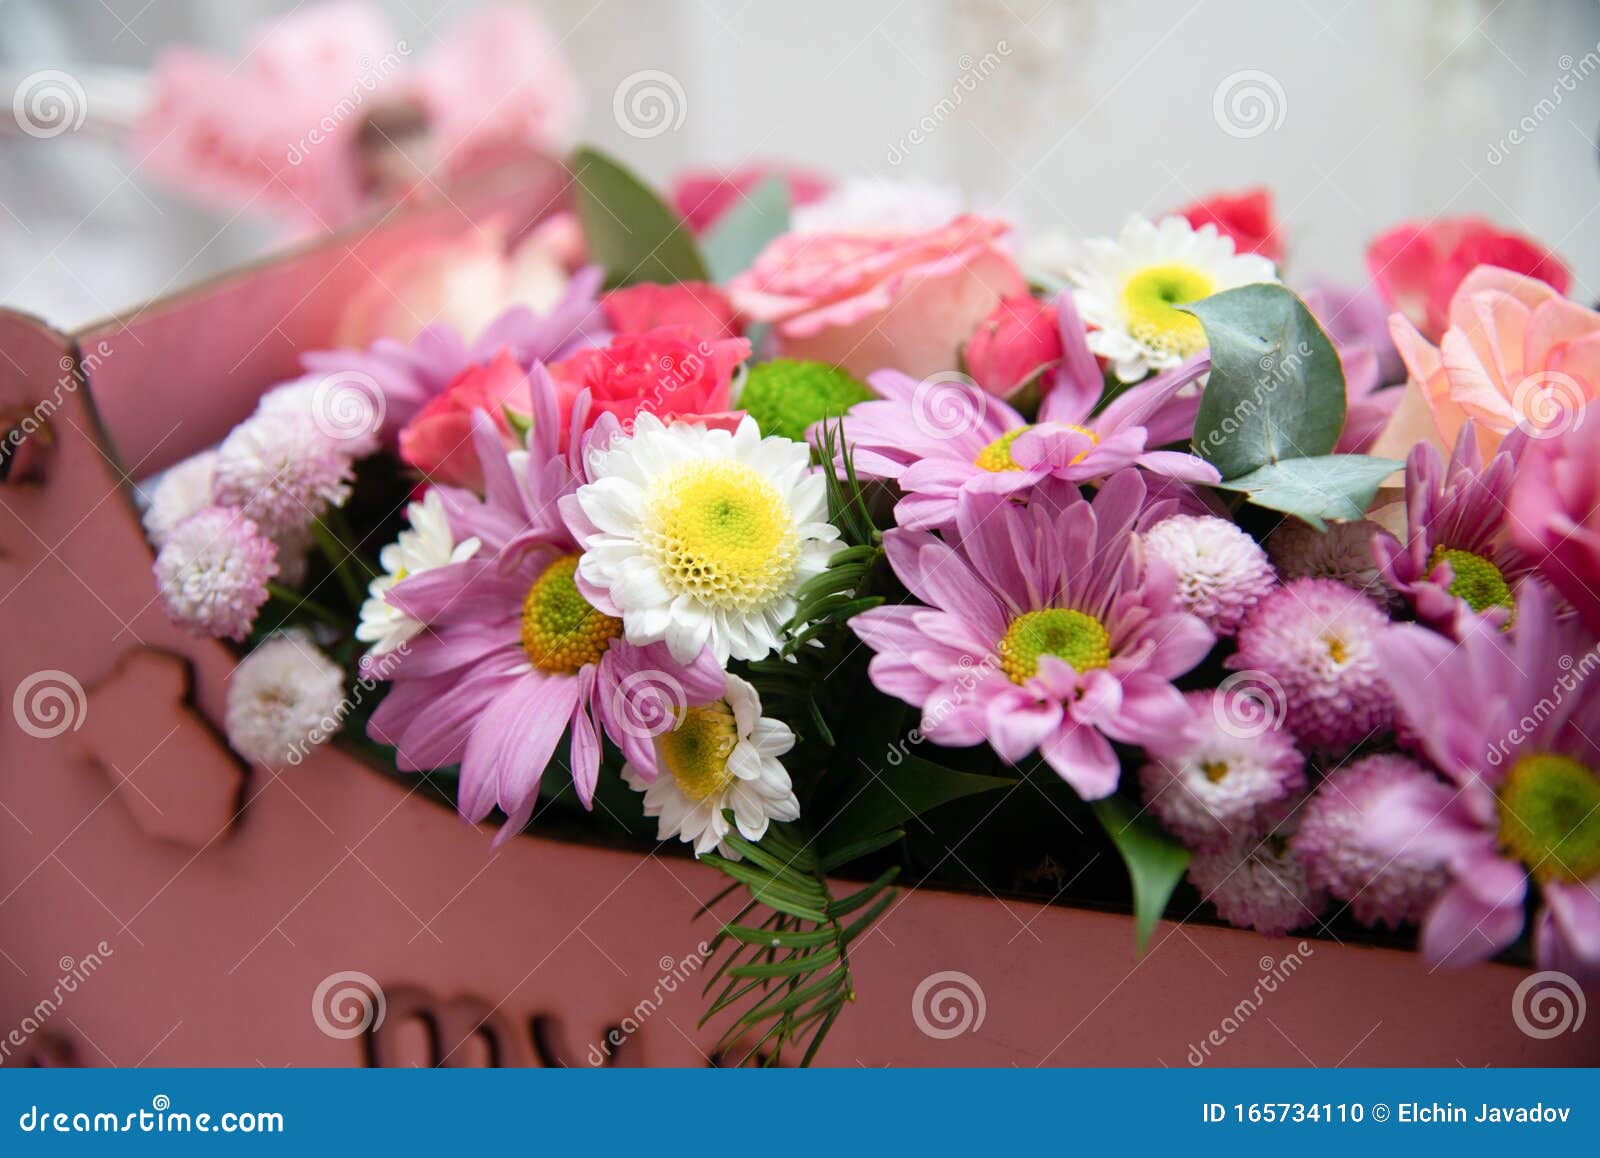 bright flowers bouquet background. beautiful close-up of a flower arrangement